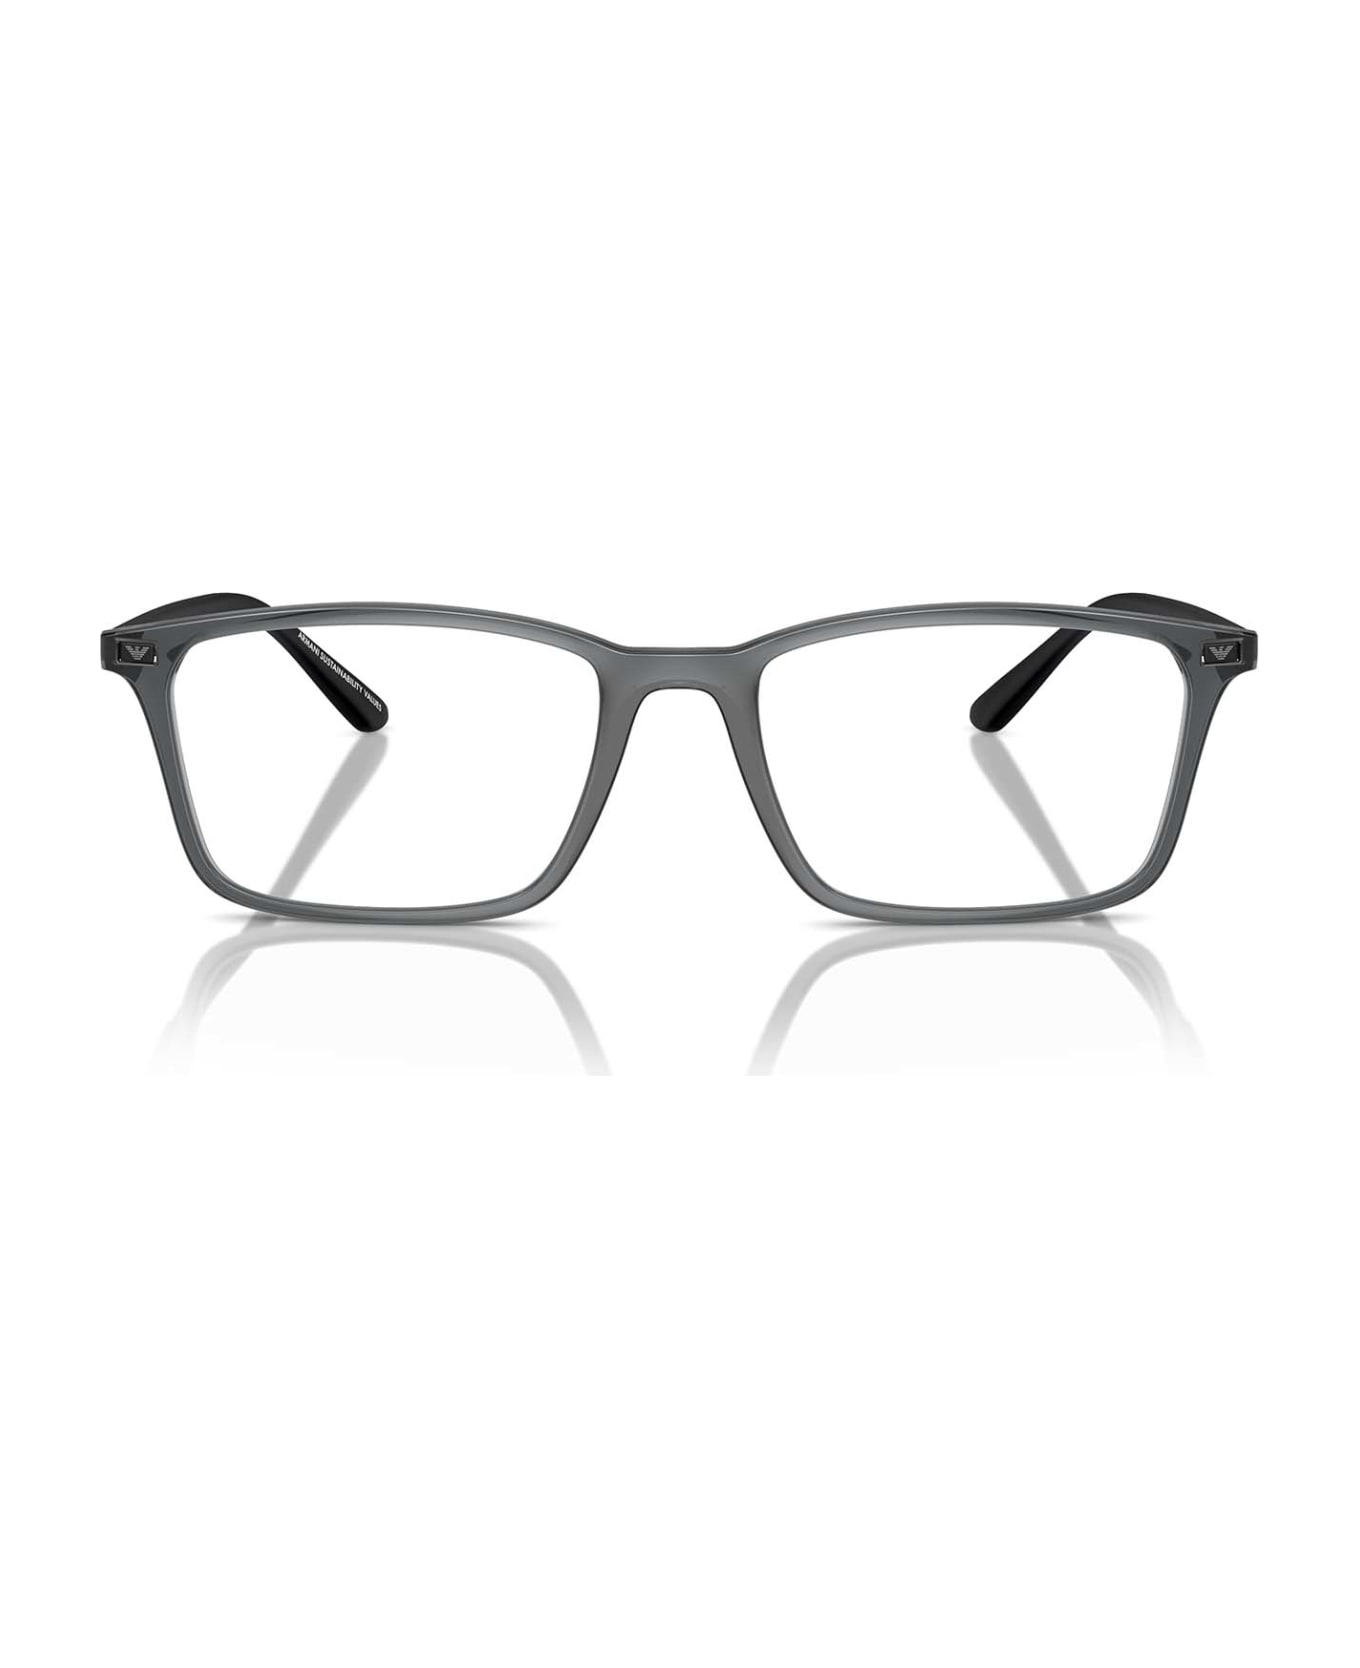 Emporio Armani Ea3237 Shiny Transparent Black Glasses - Shiny Transparent Black